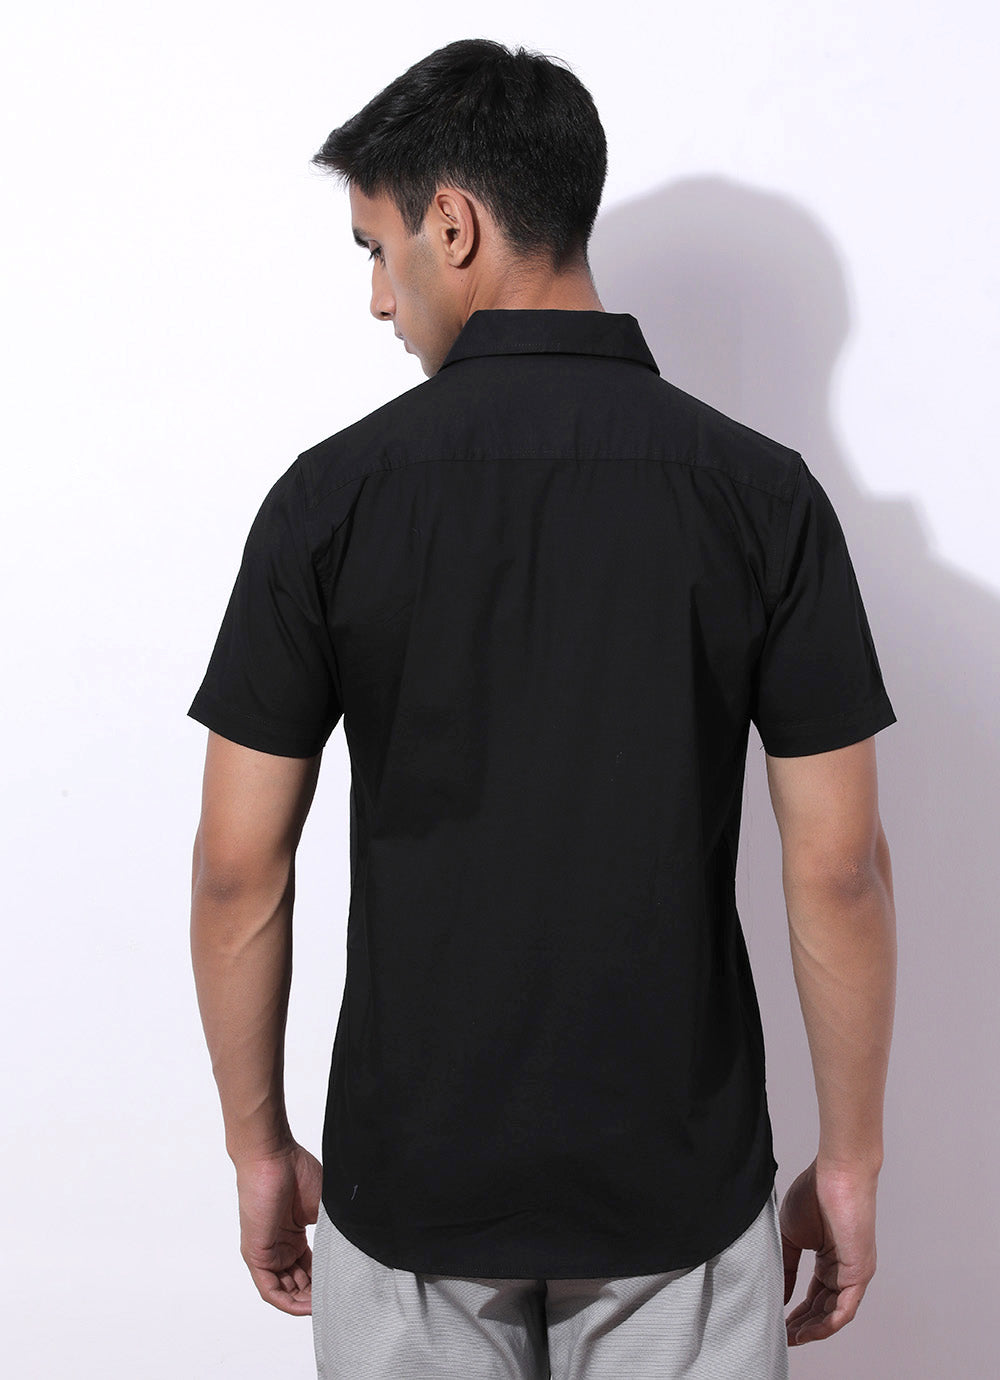 Kes Black - A Slim Fit Cotton Shirt With Single Patch Pocket.